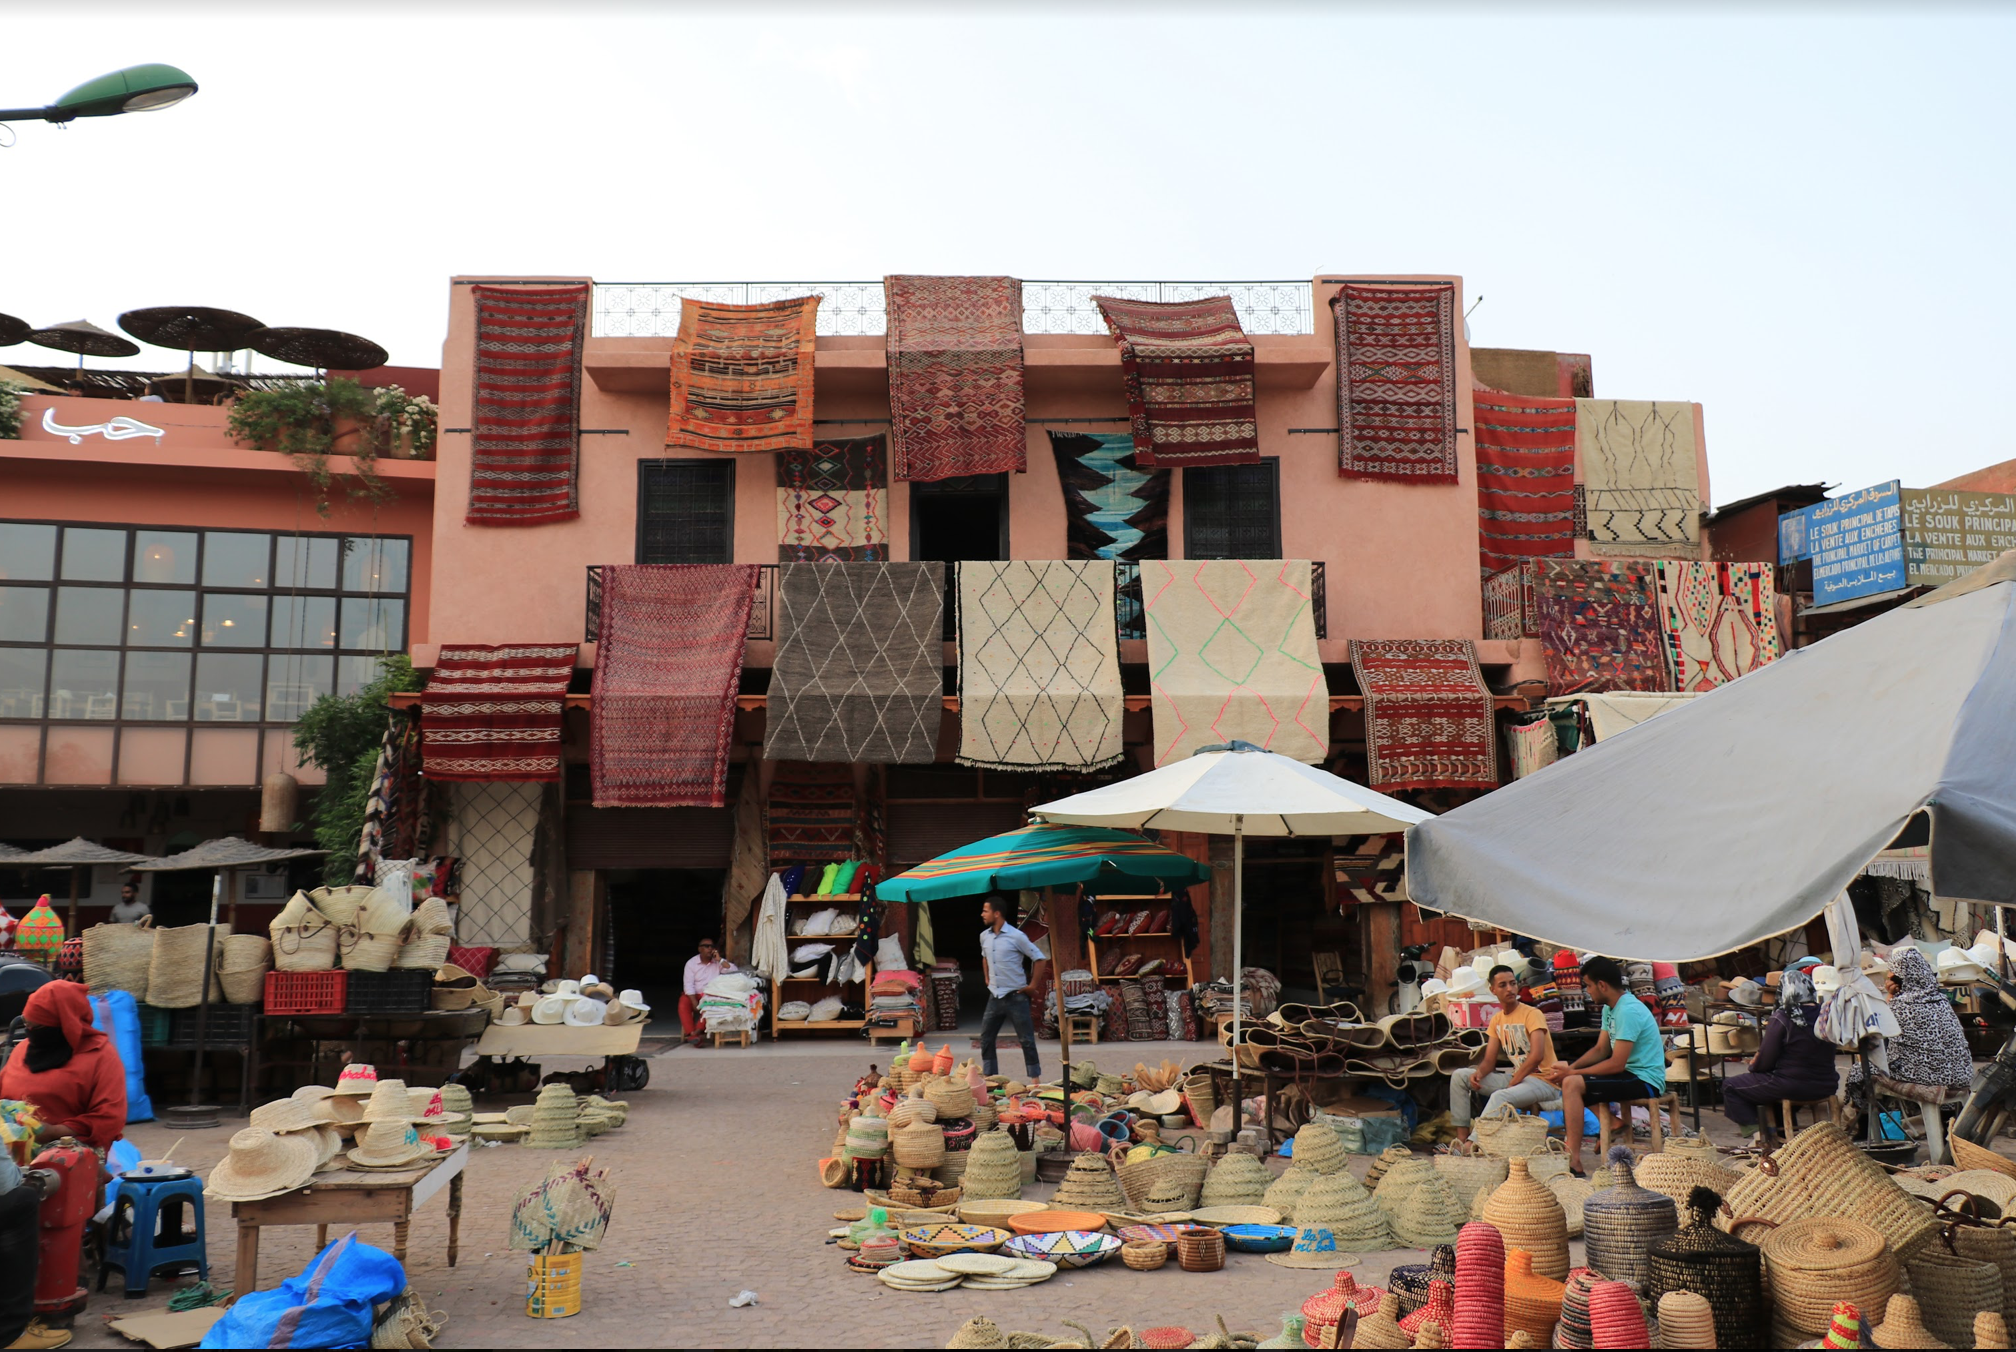 Rug shopping in the Medina 